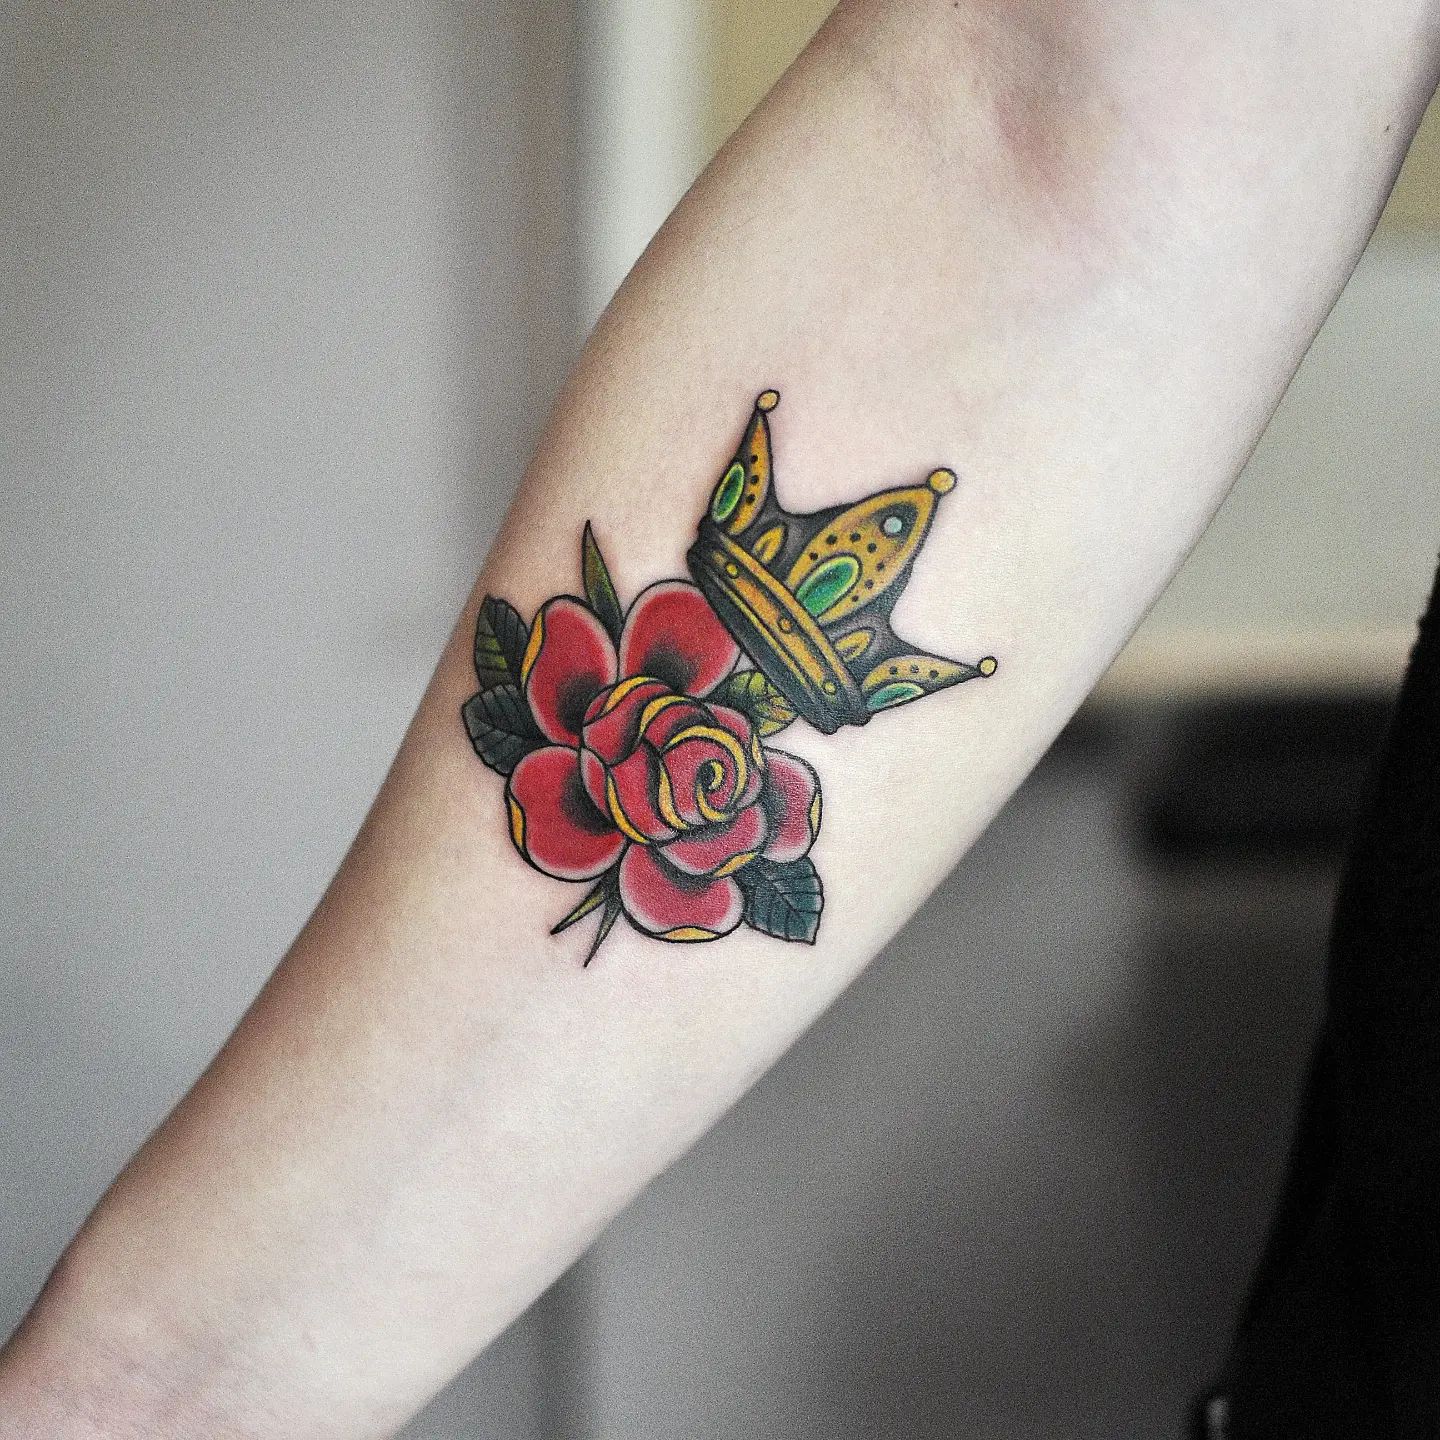 Tatuaje de rosa con una corona